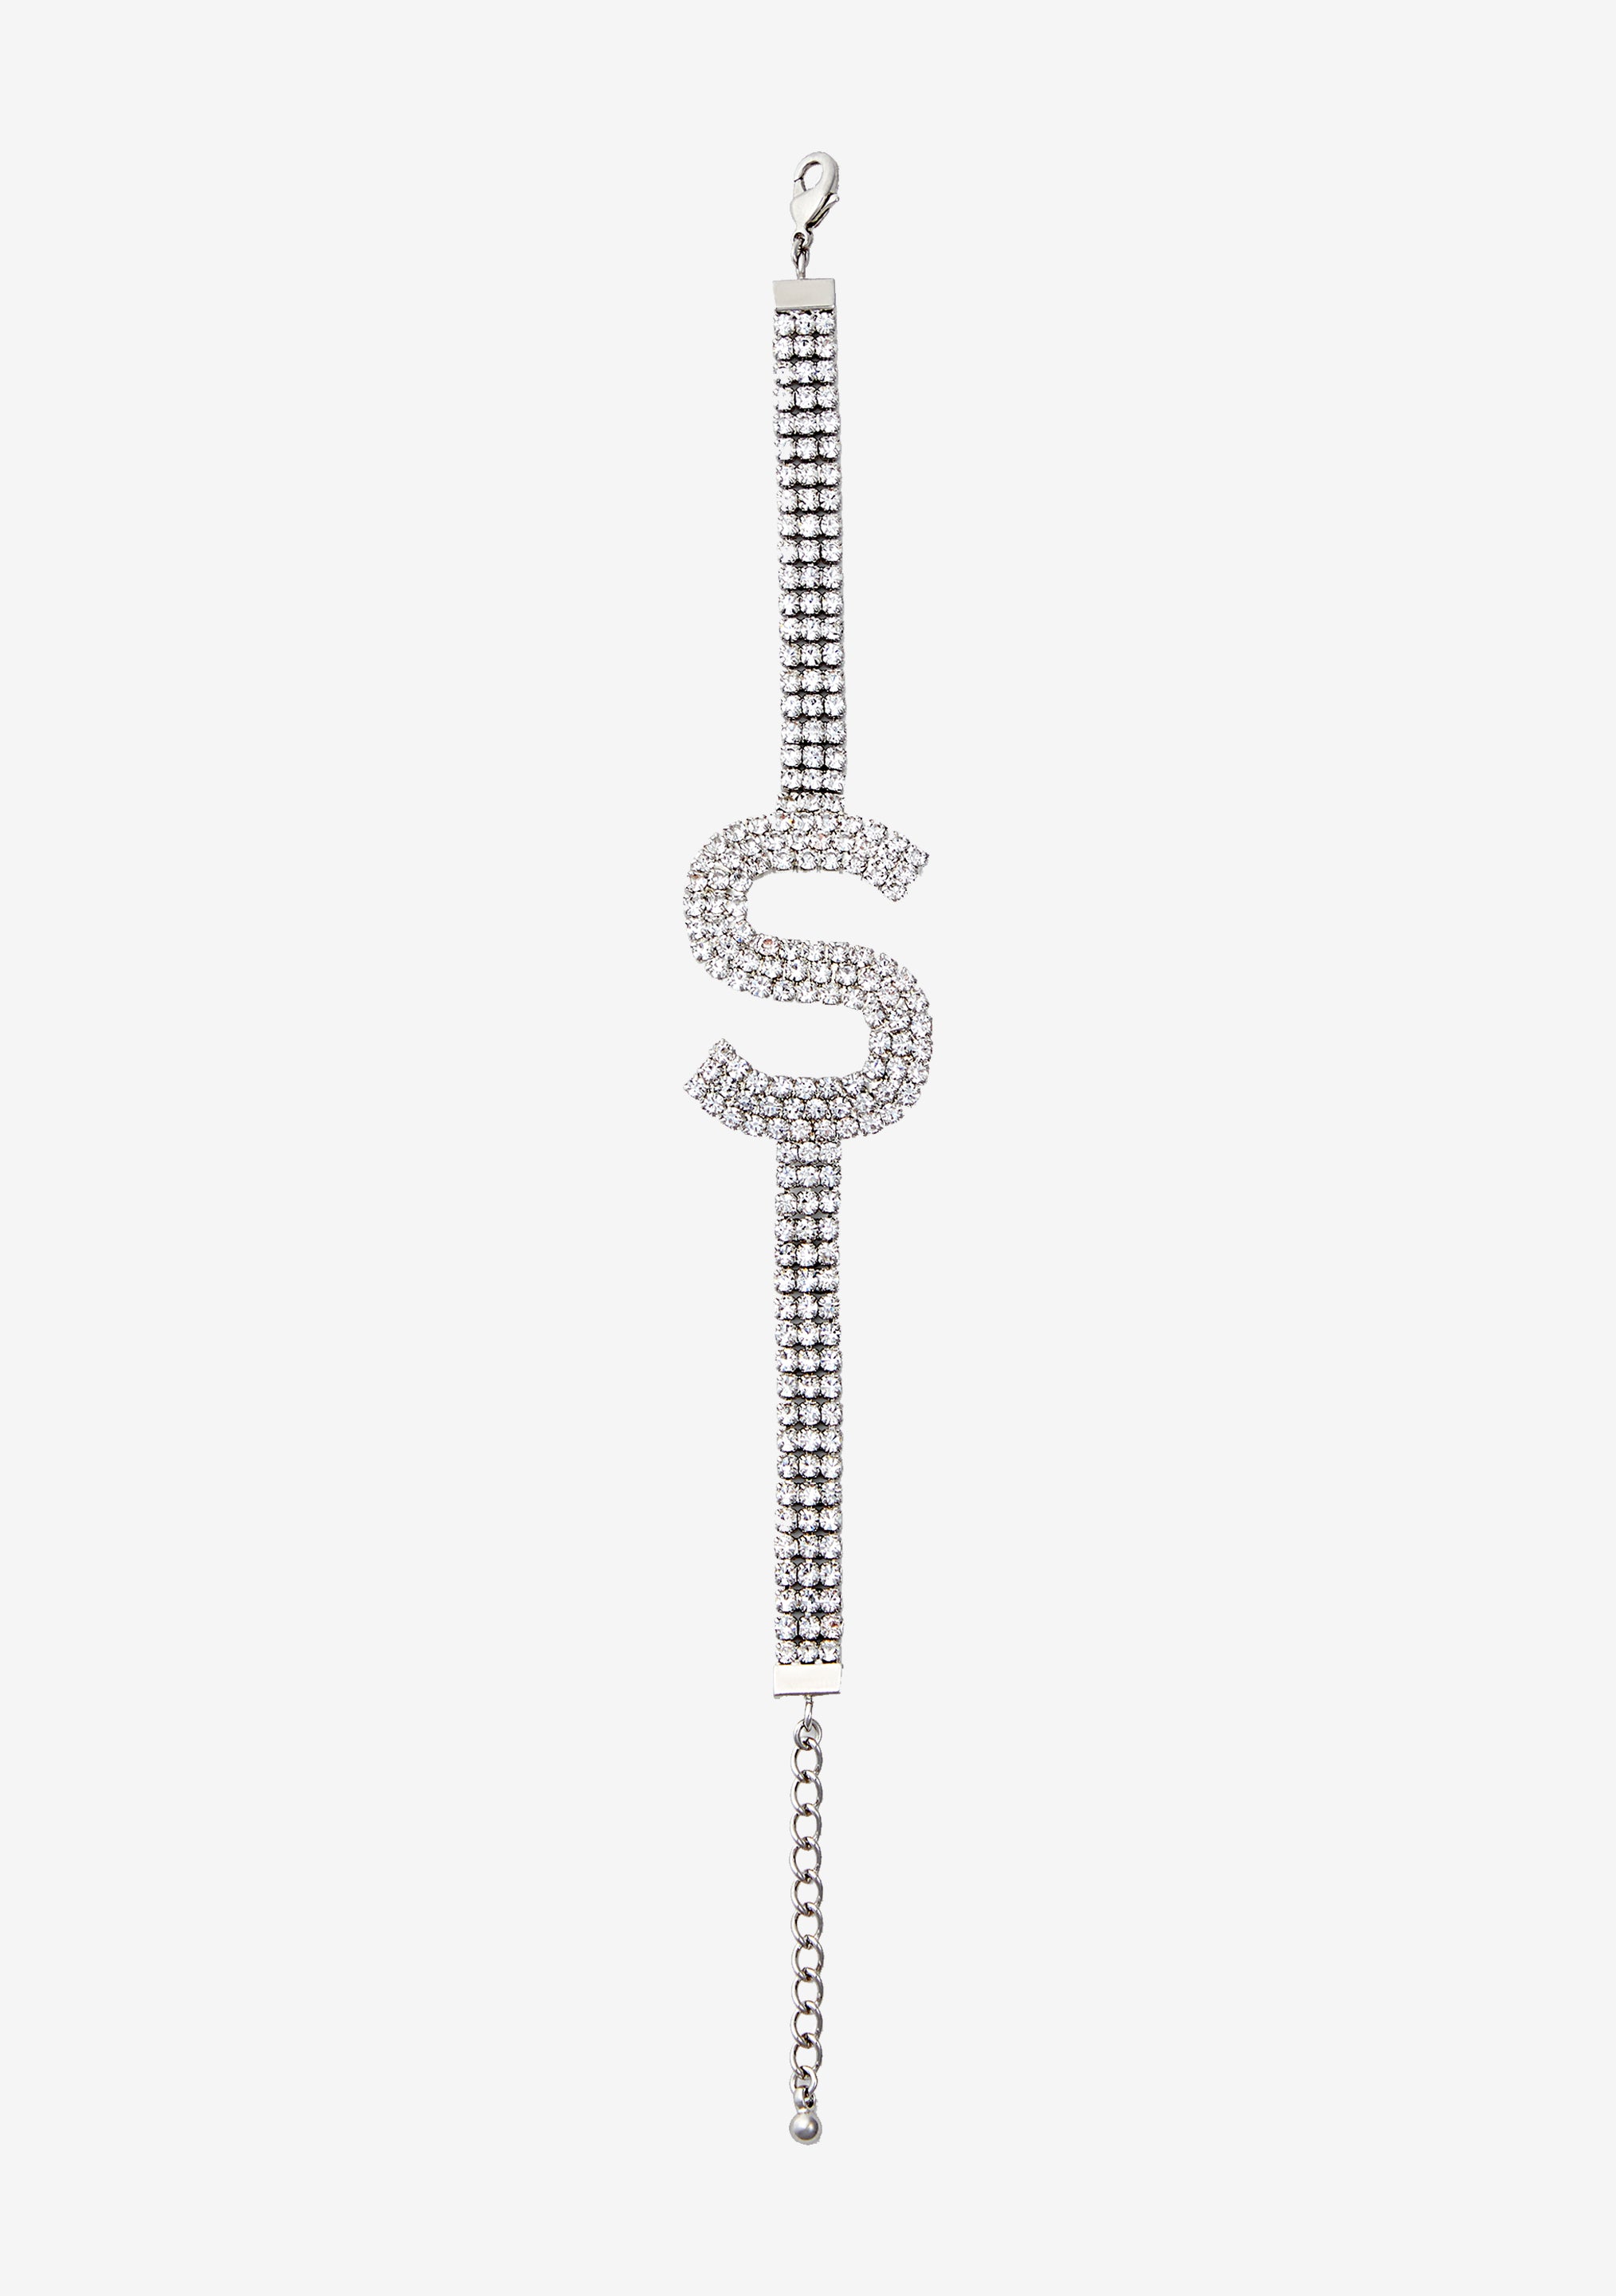 Adjustable Arabic Ha (H) Letter Bracelet - Brass, Gold / Silver Plating -  Unisex | eBay